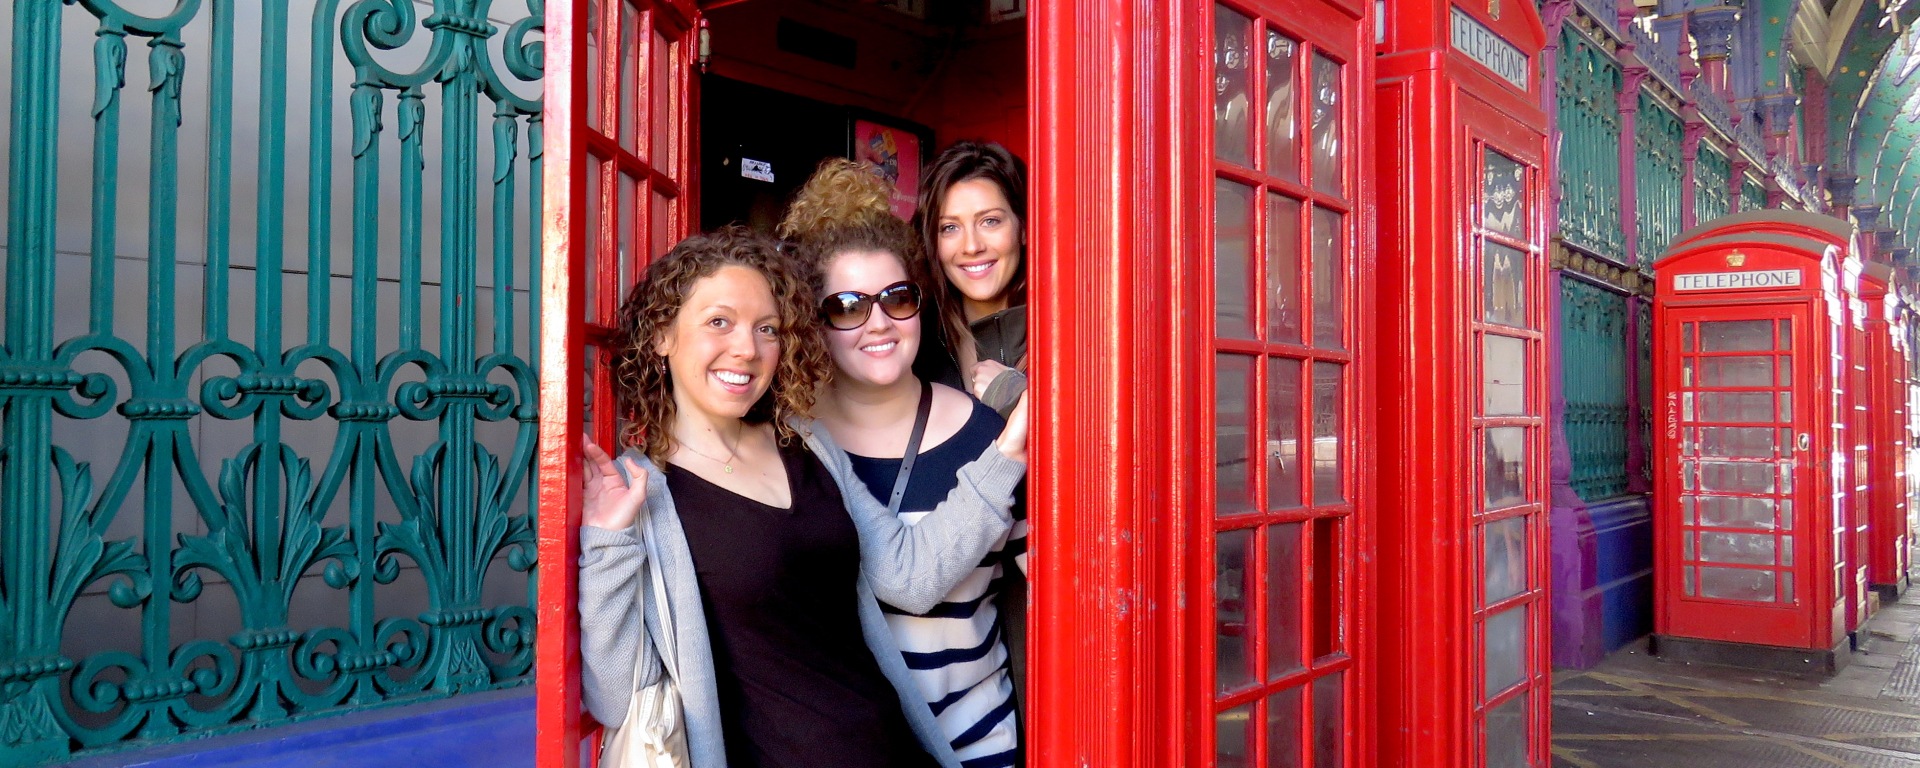 Telephone Booth Shennanigans - London, England, United Kingdom - by Anika Mikkelson - Miss Maps